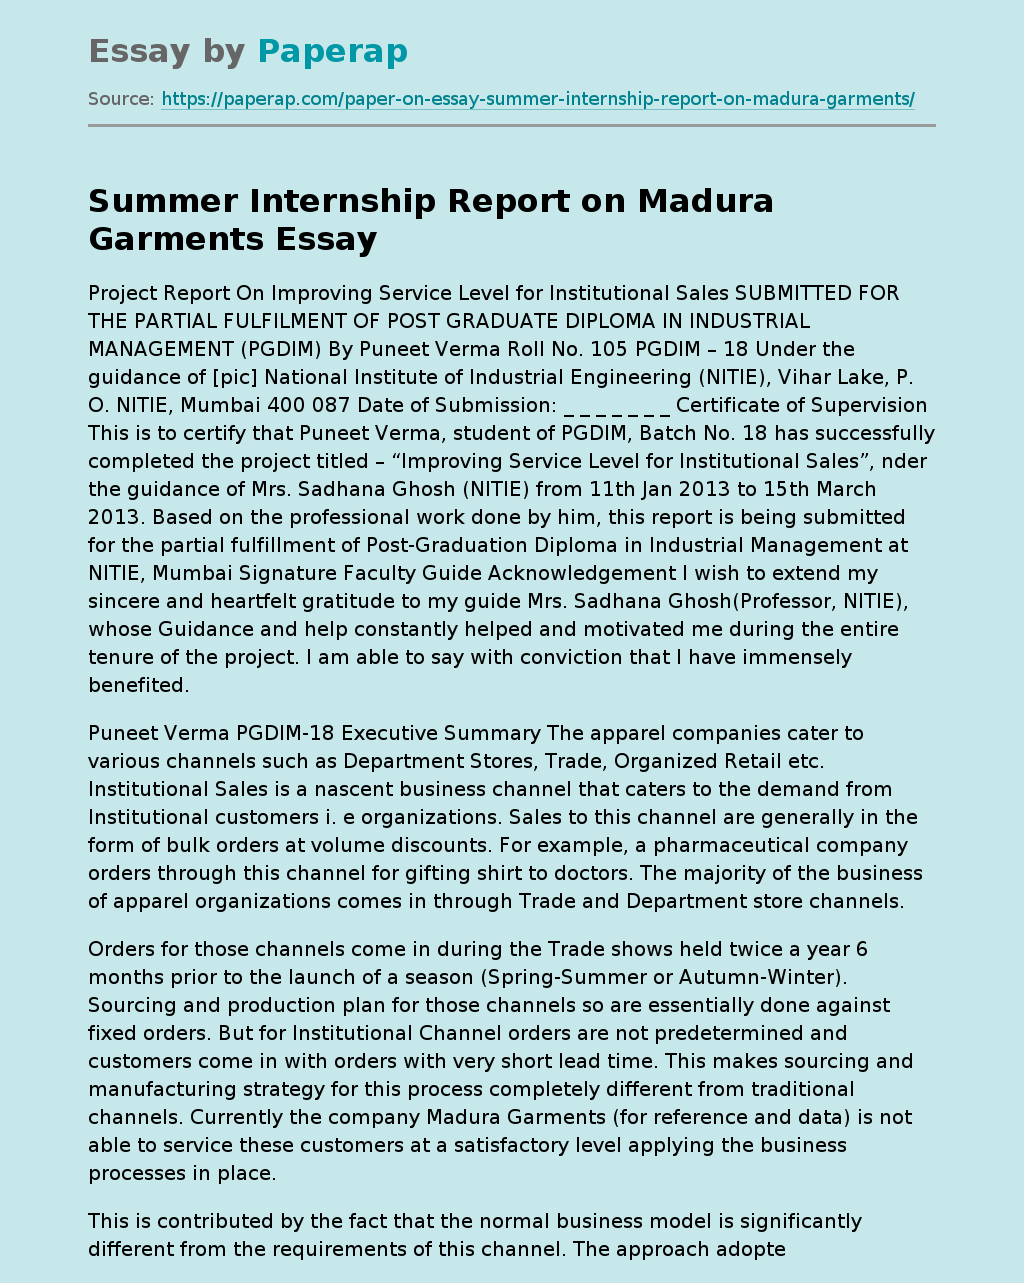 Summer Internship Report on Madura Garments